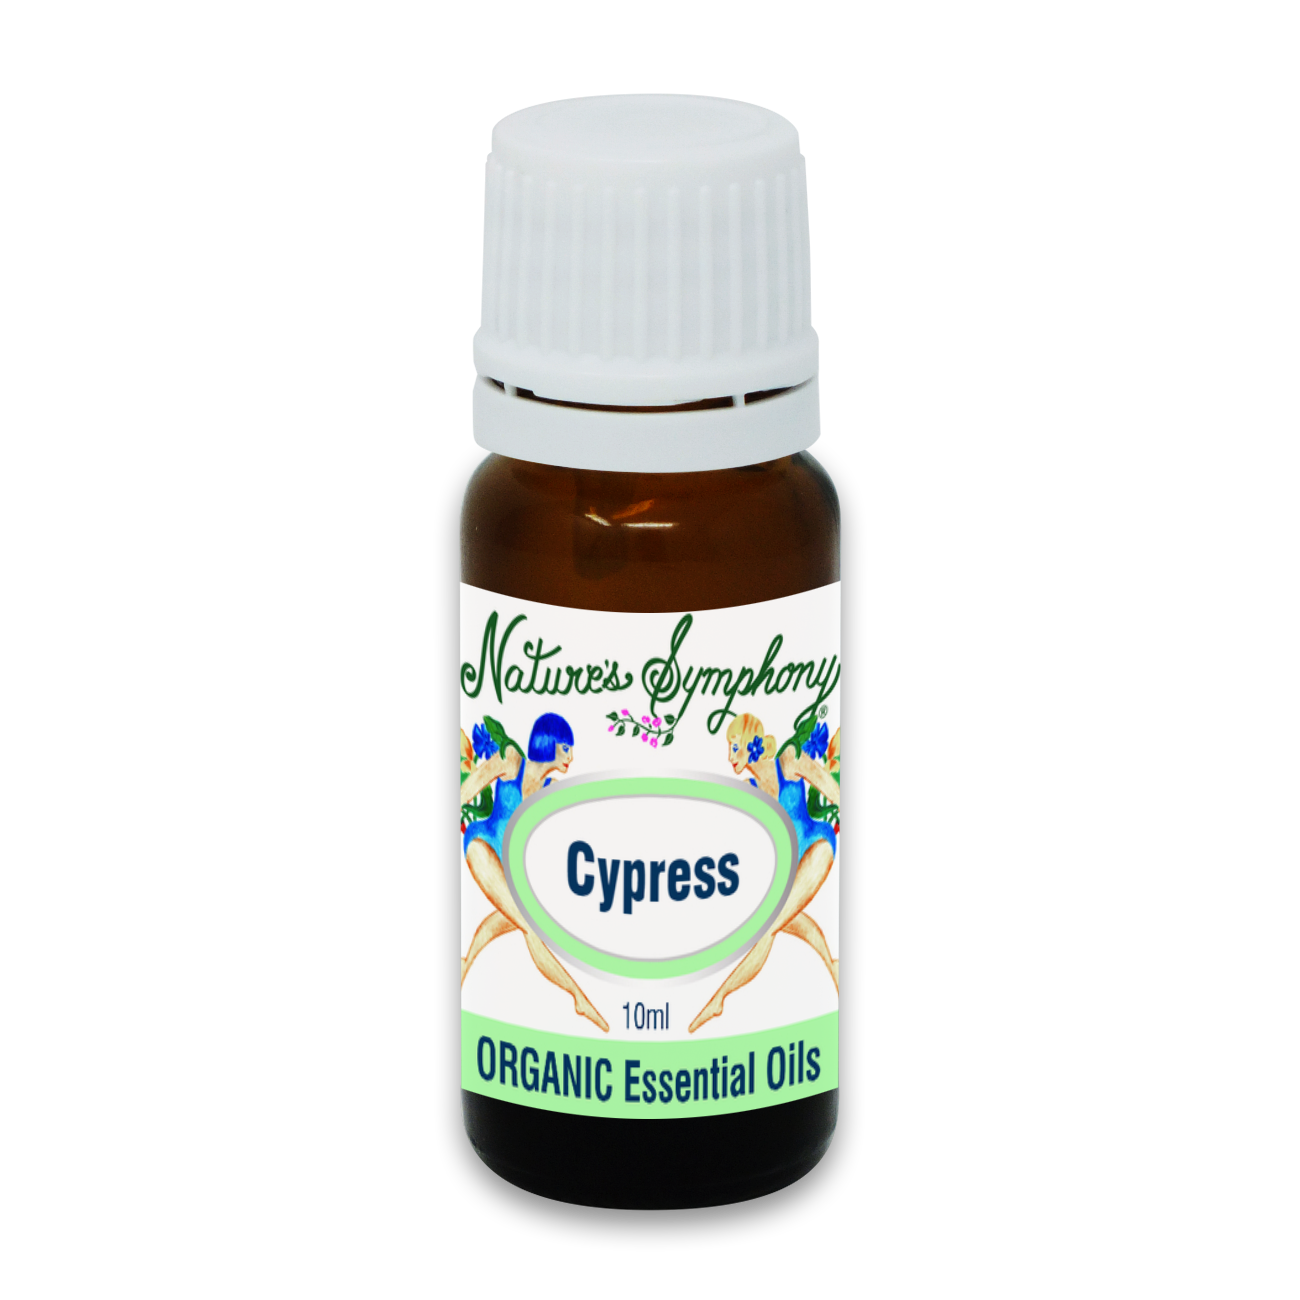 Cypress, Organic/Wildcrafted oil - 10ml